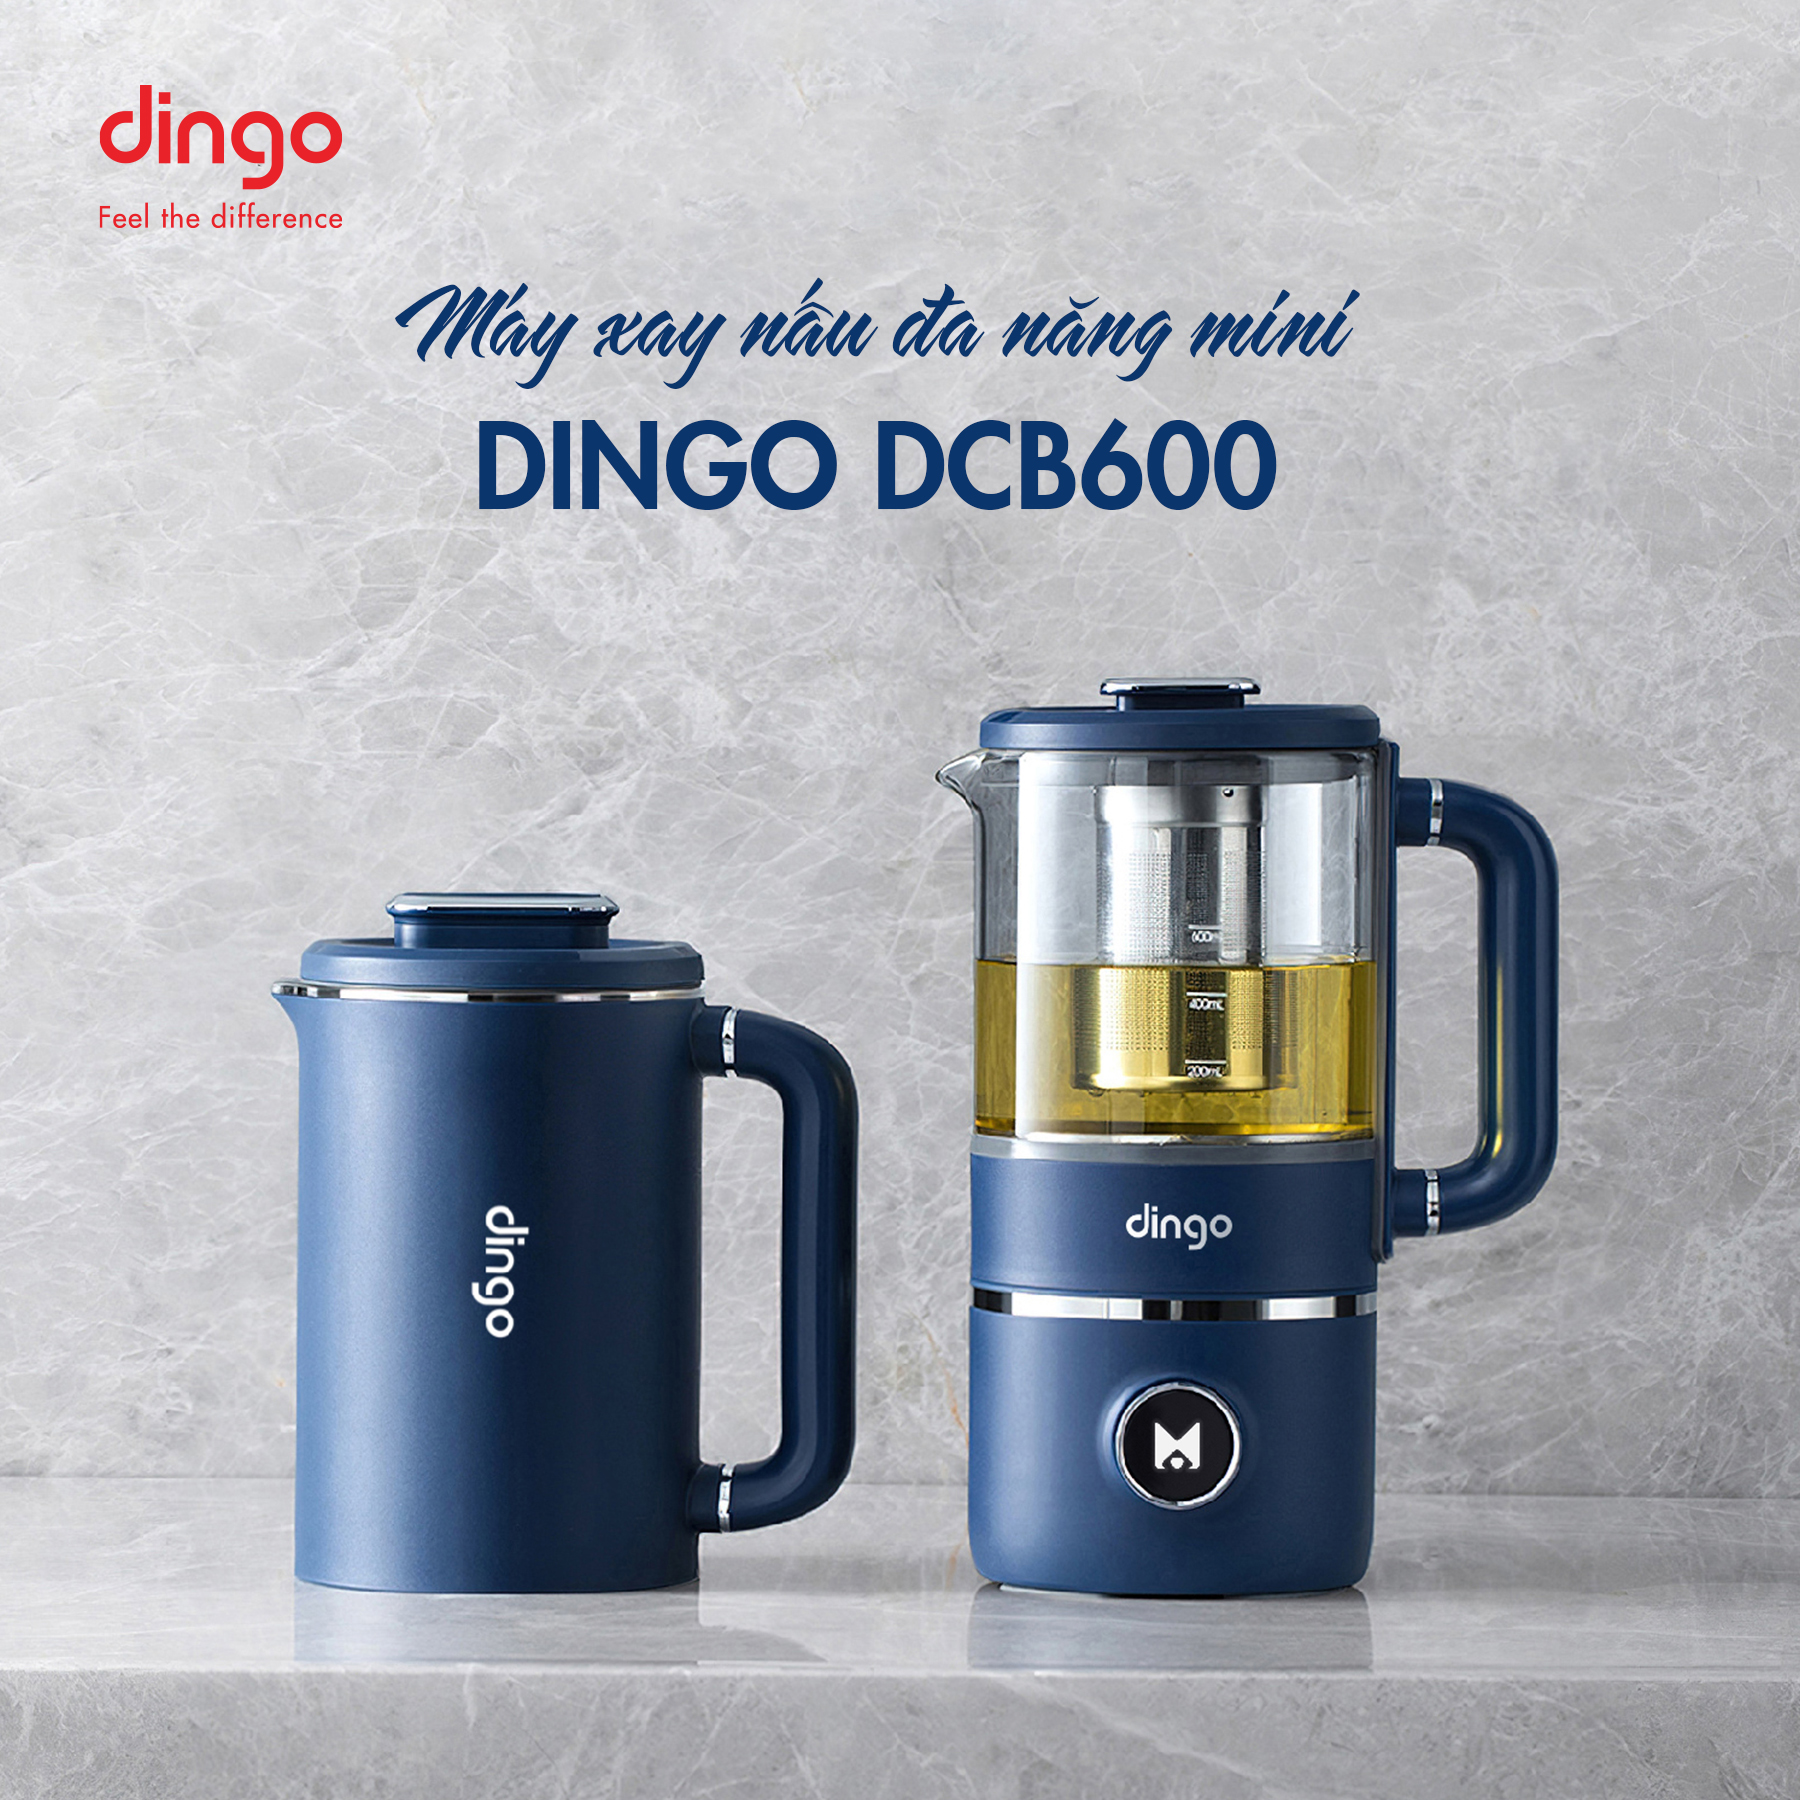 Máy xay nấu đa năng mini DINGO DCB600.